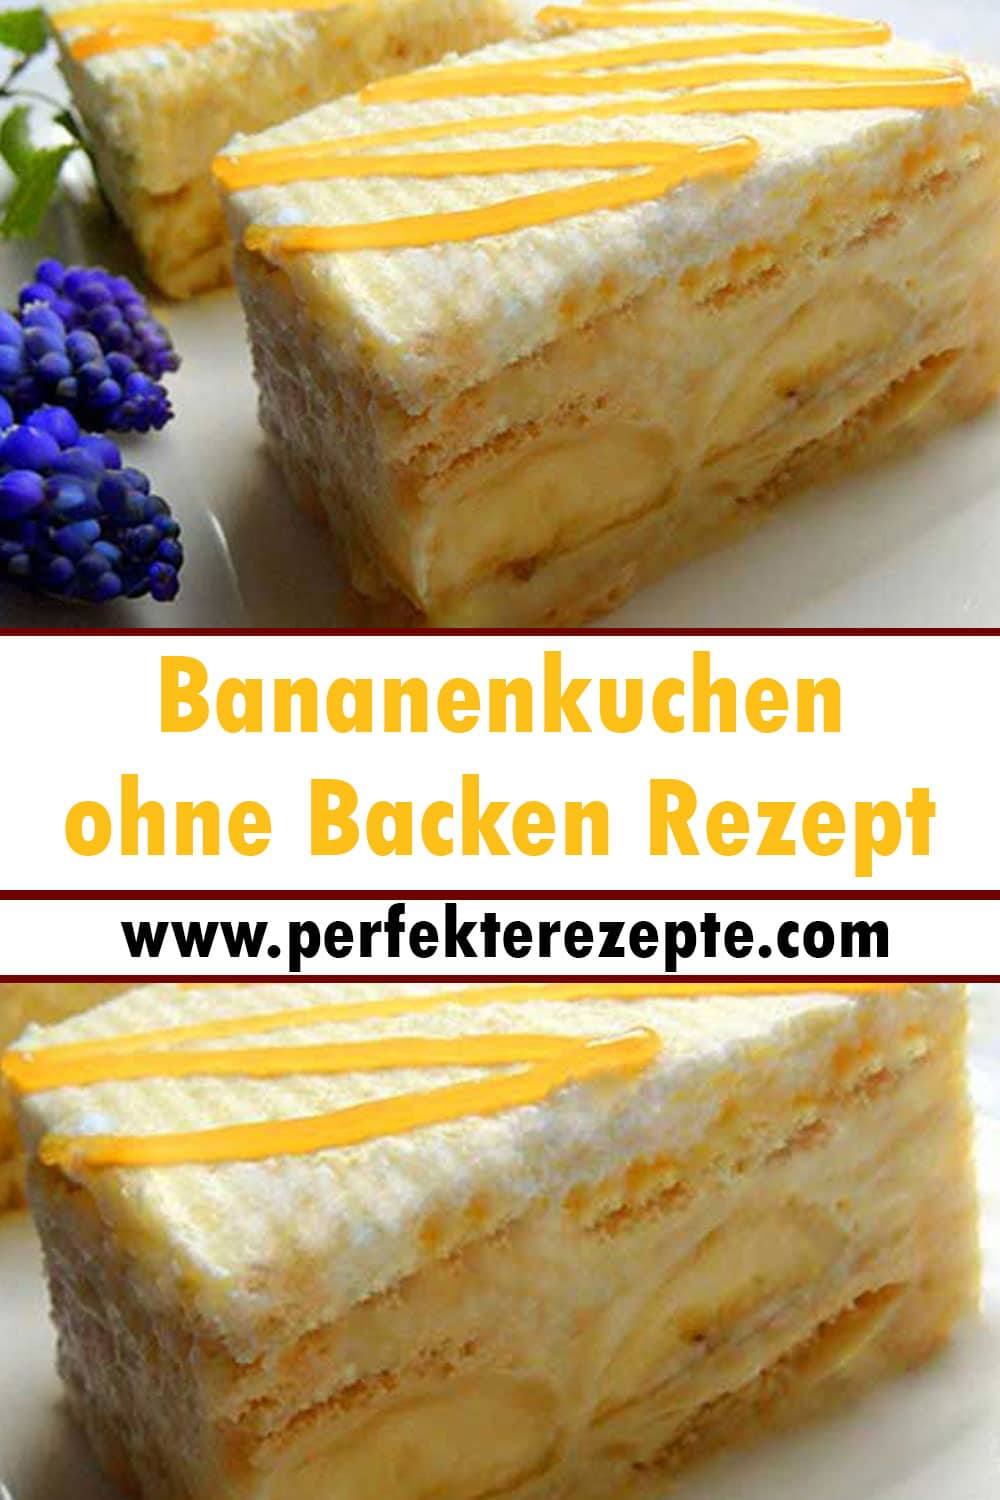 Bananenkuchen: Blechkuchen ohne Backen Rezept